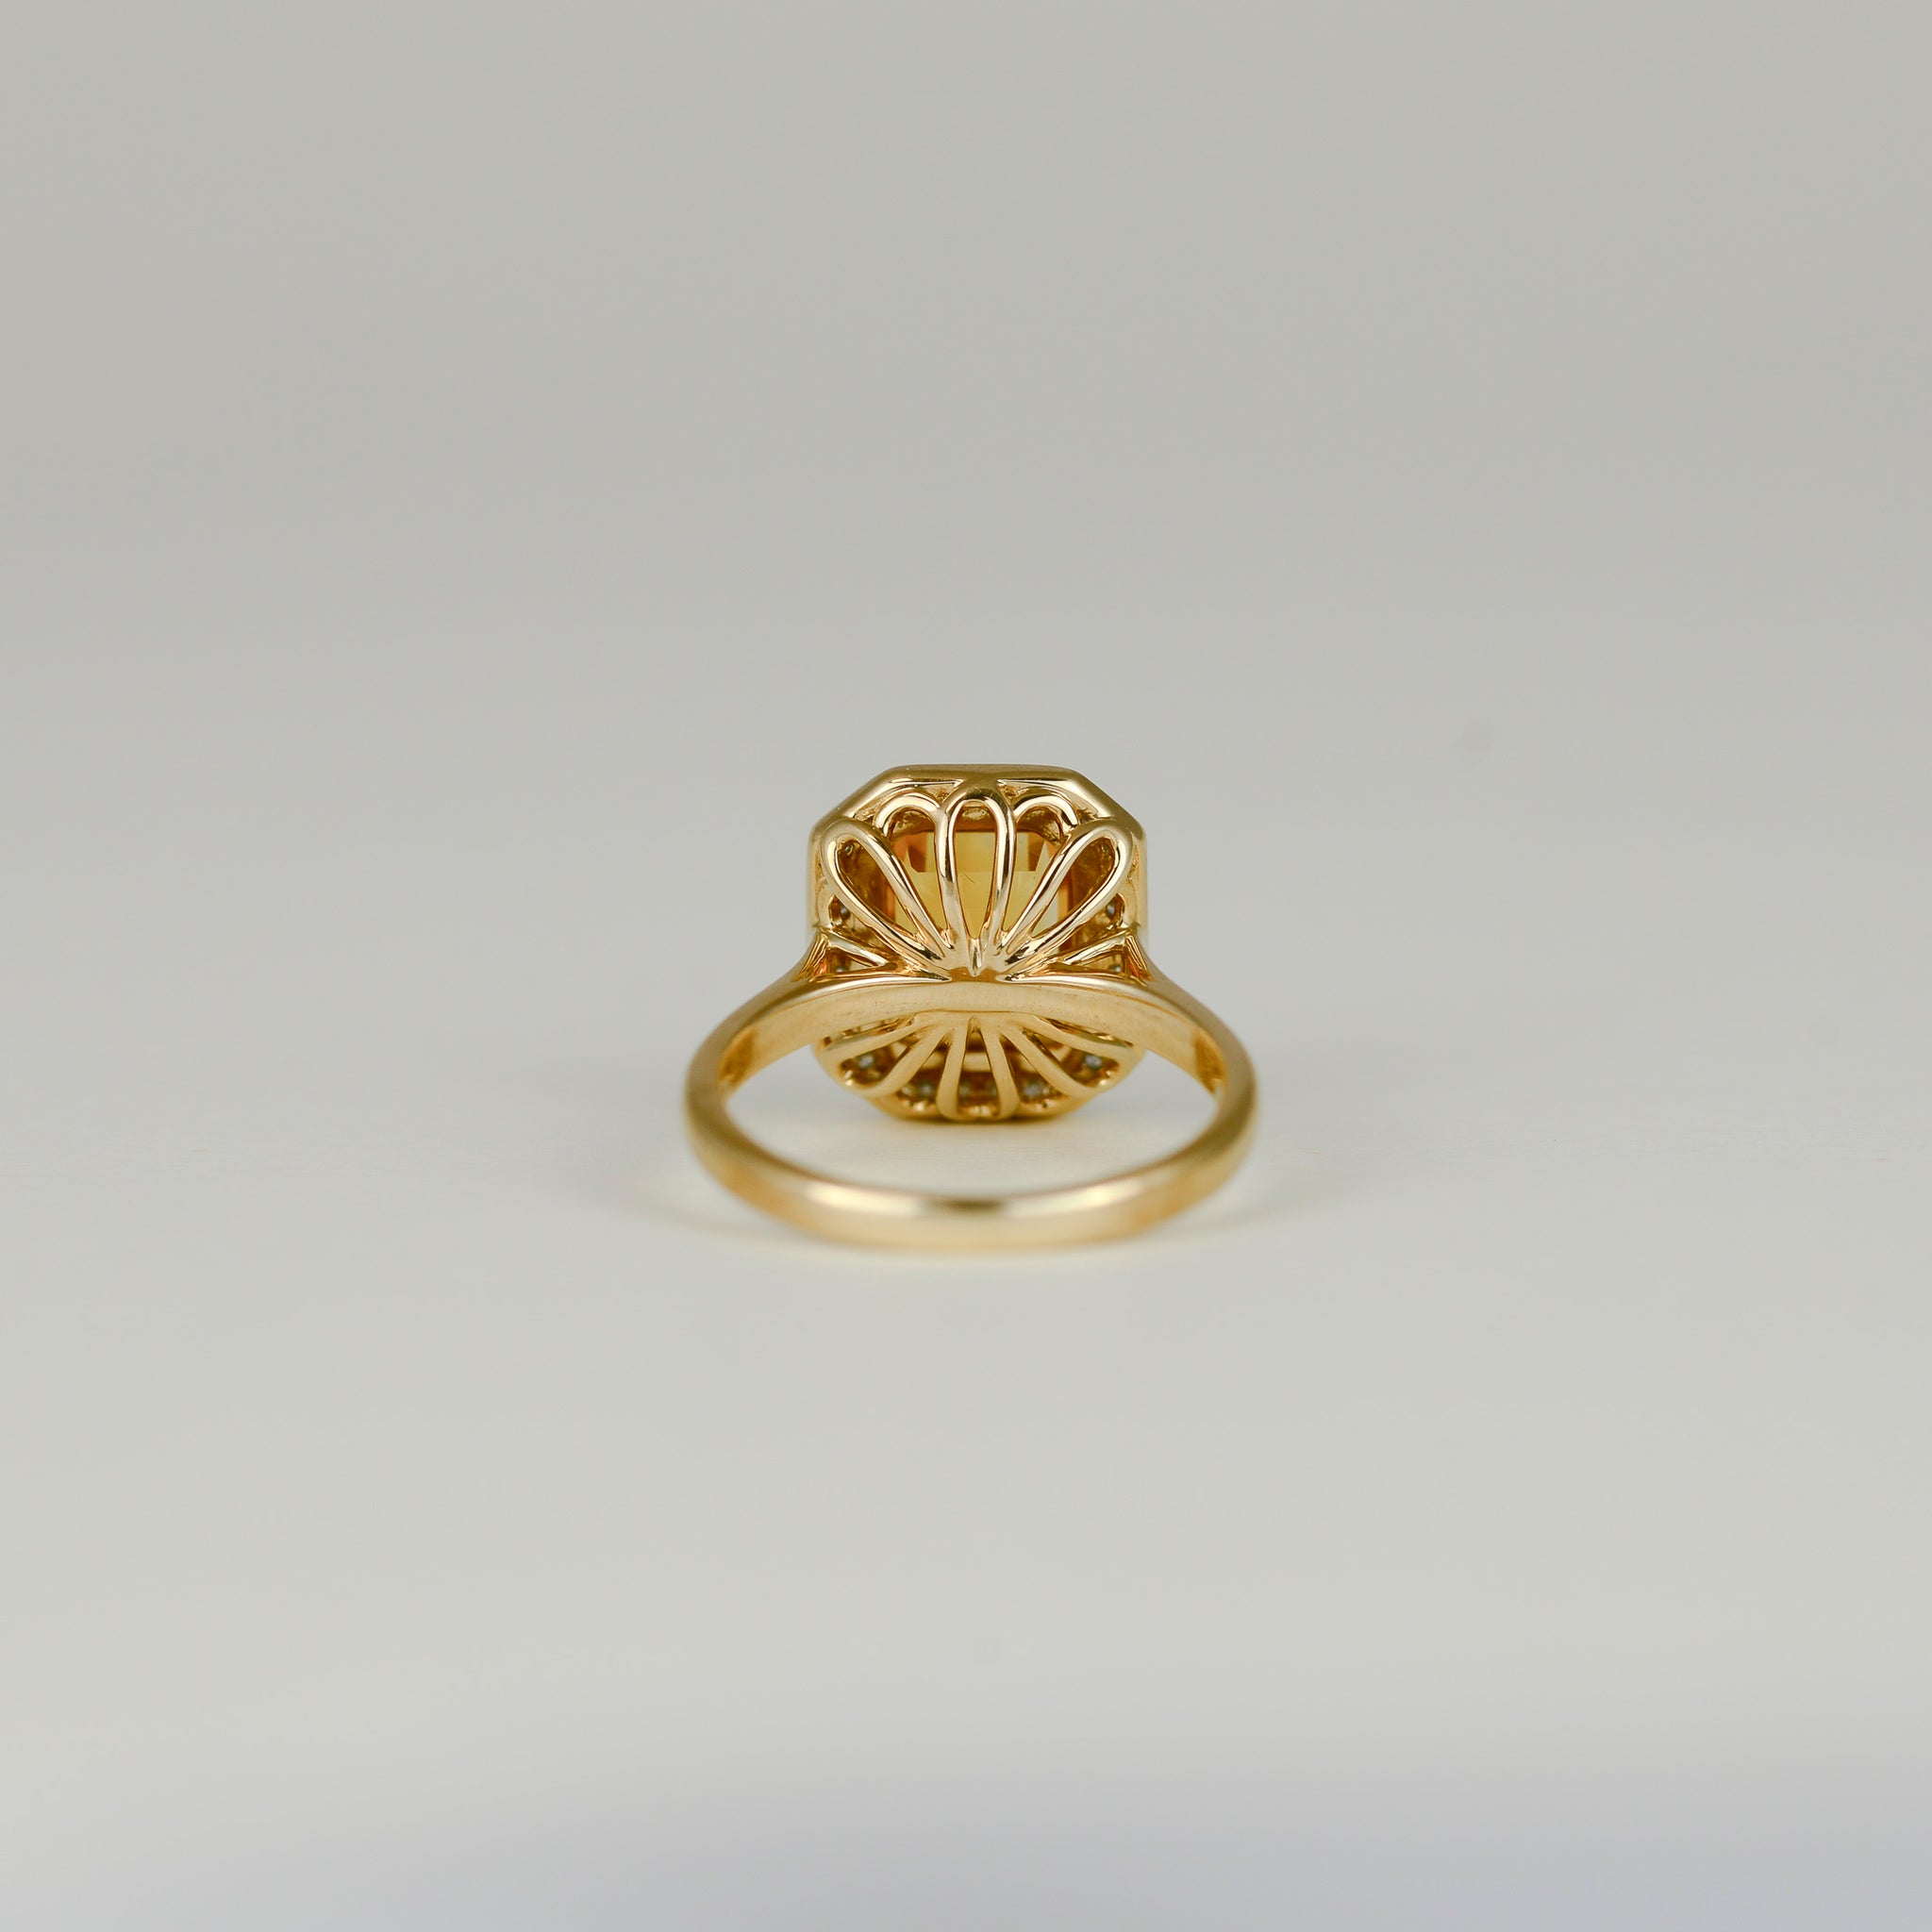 9ct Yellow Gold 2.09ct Emerald Cut Citrine and Diamond Art Deco Dress Ring